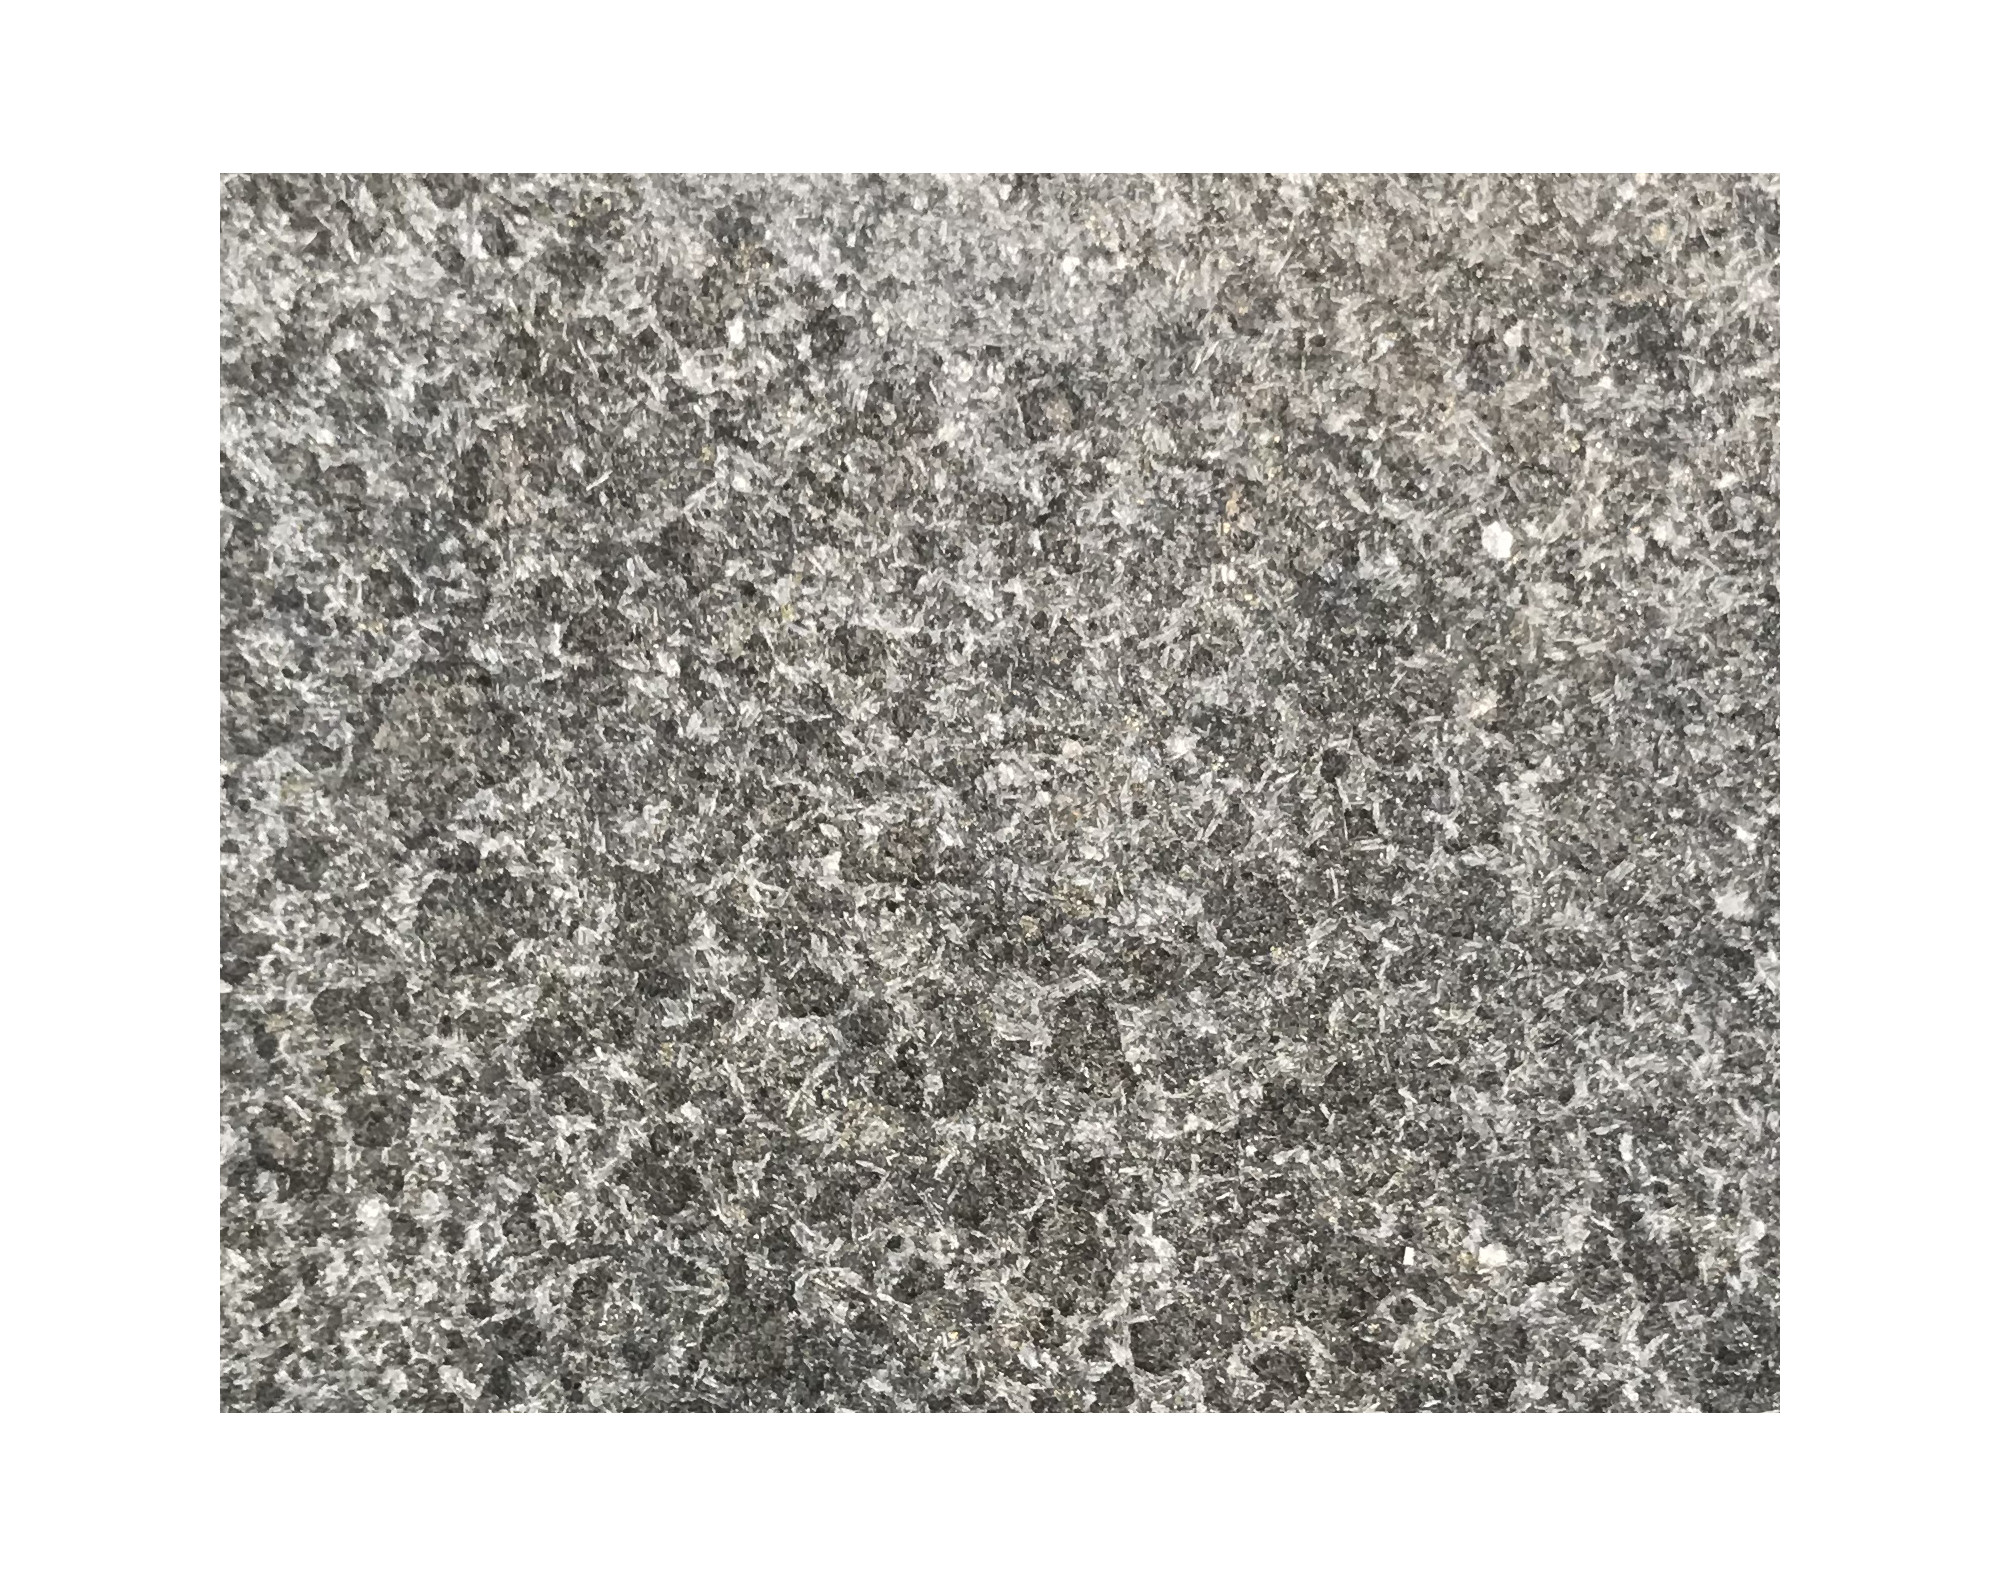 Harmo roc kirunaset, natura-serie, rechthoekig afmetingen 5,00mx10,00m, bergzwart graniet